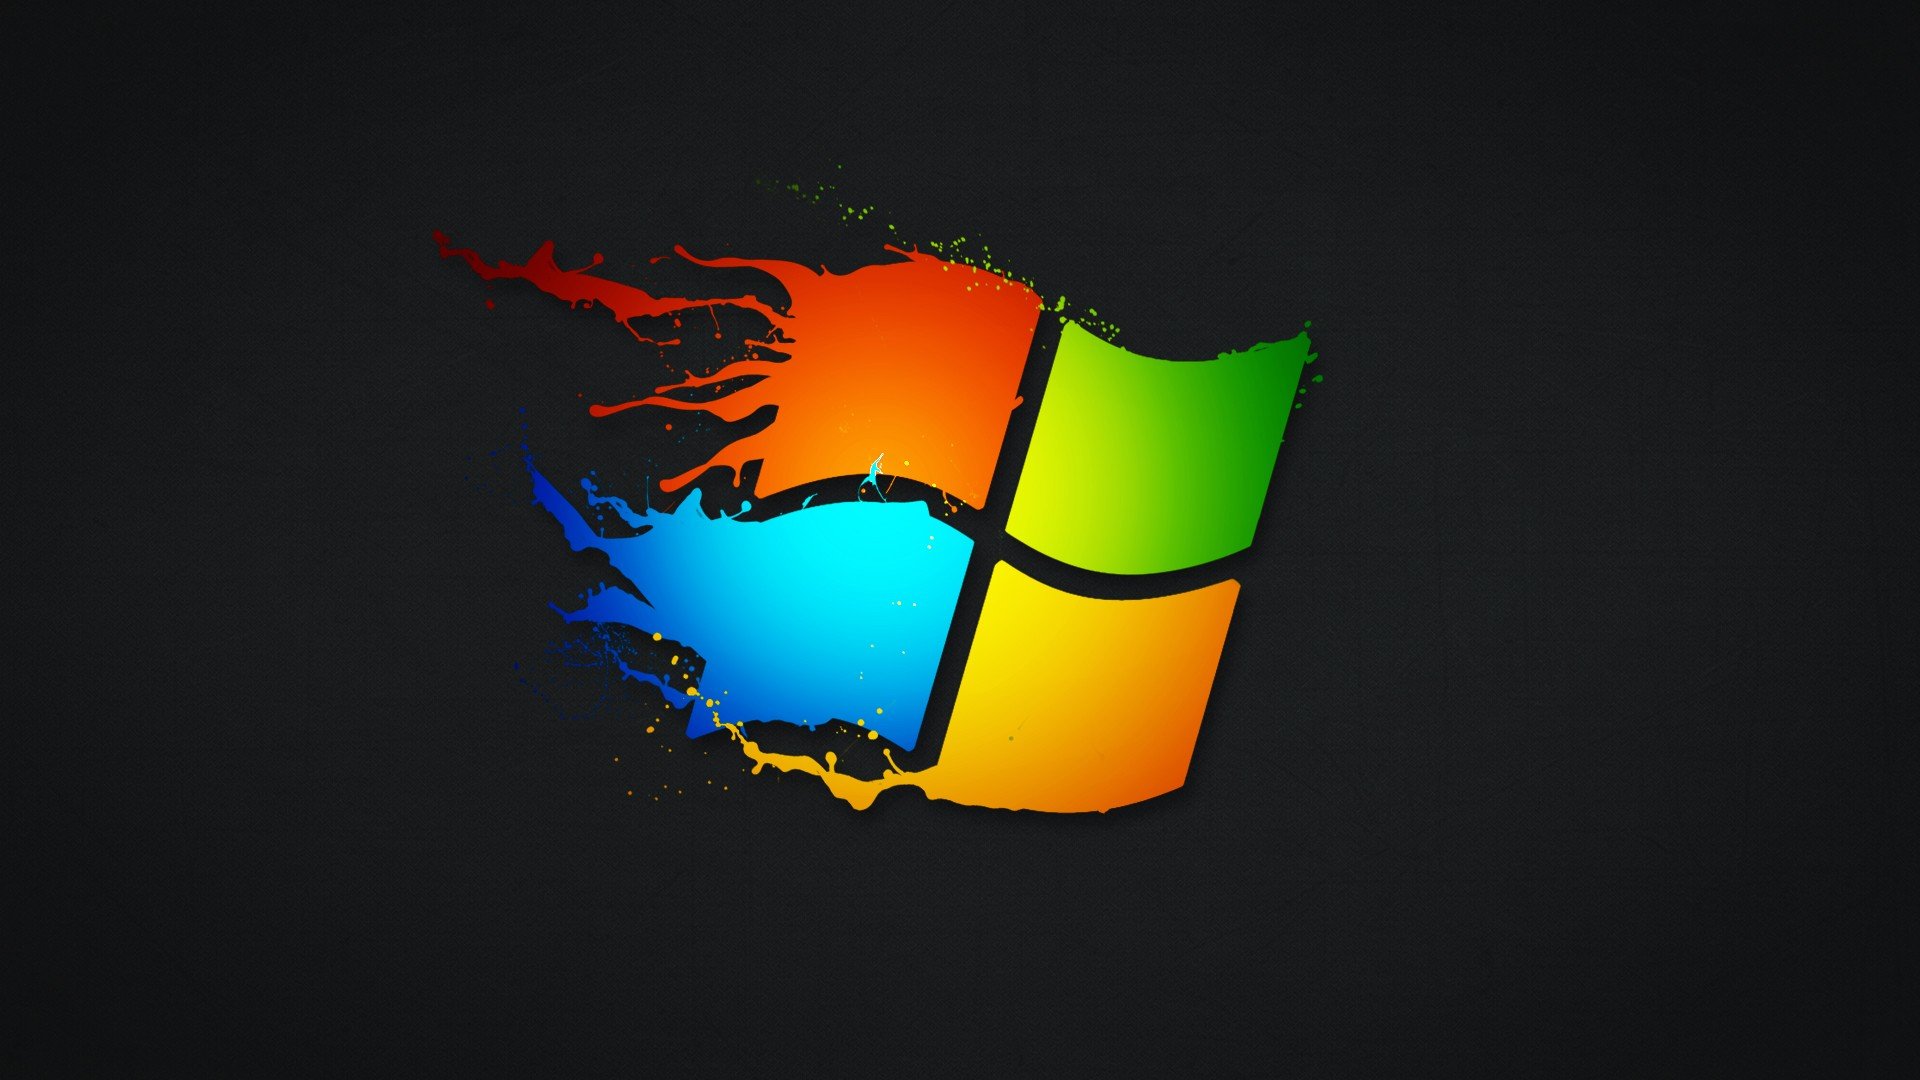 Windows 7, Microsoft Windows, Paint splatter, Simple background Wallpaper